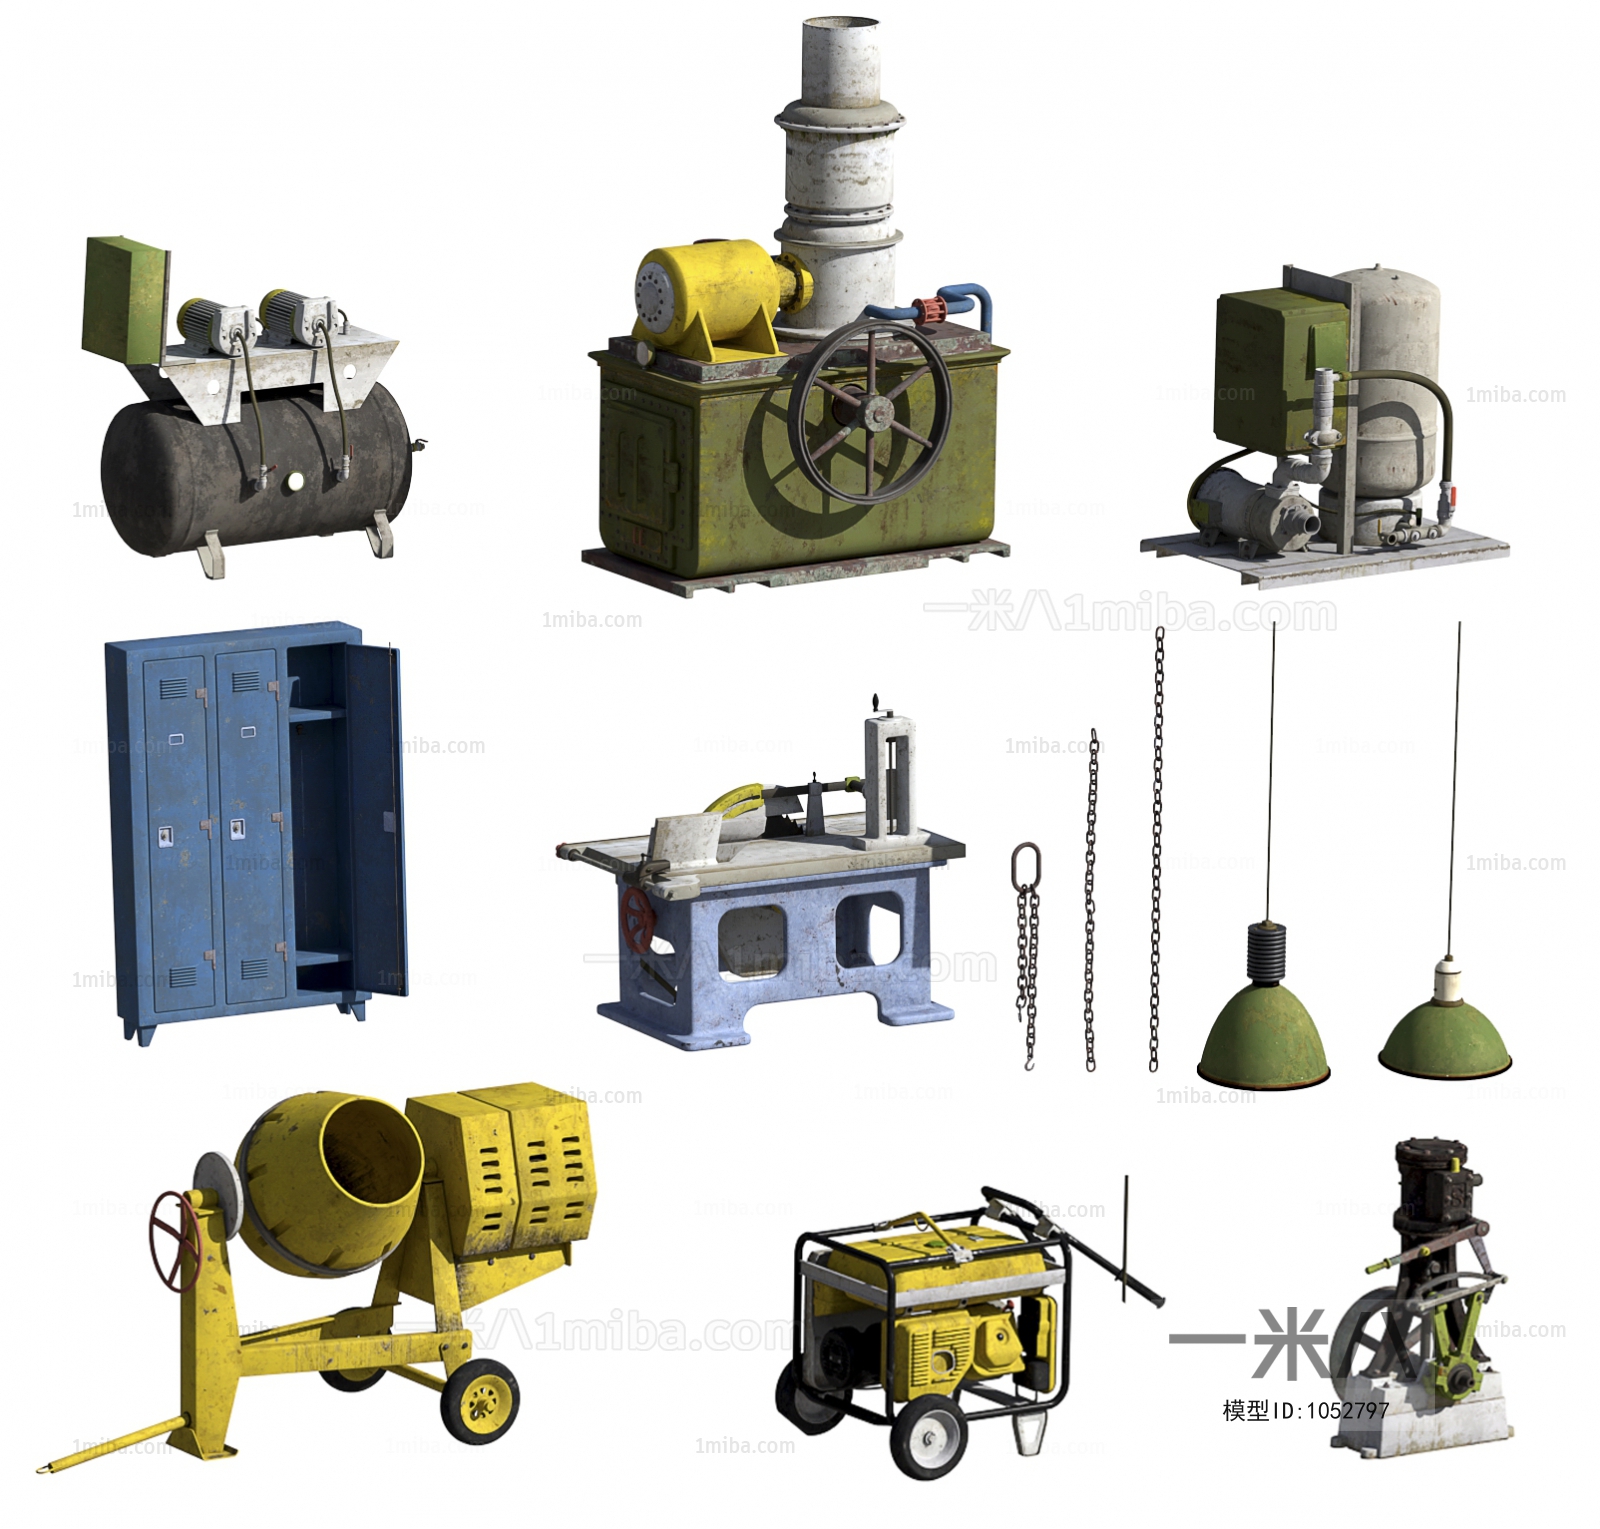 Modern Industrial Equipment